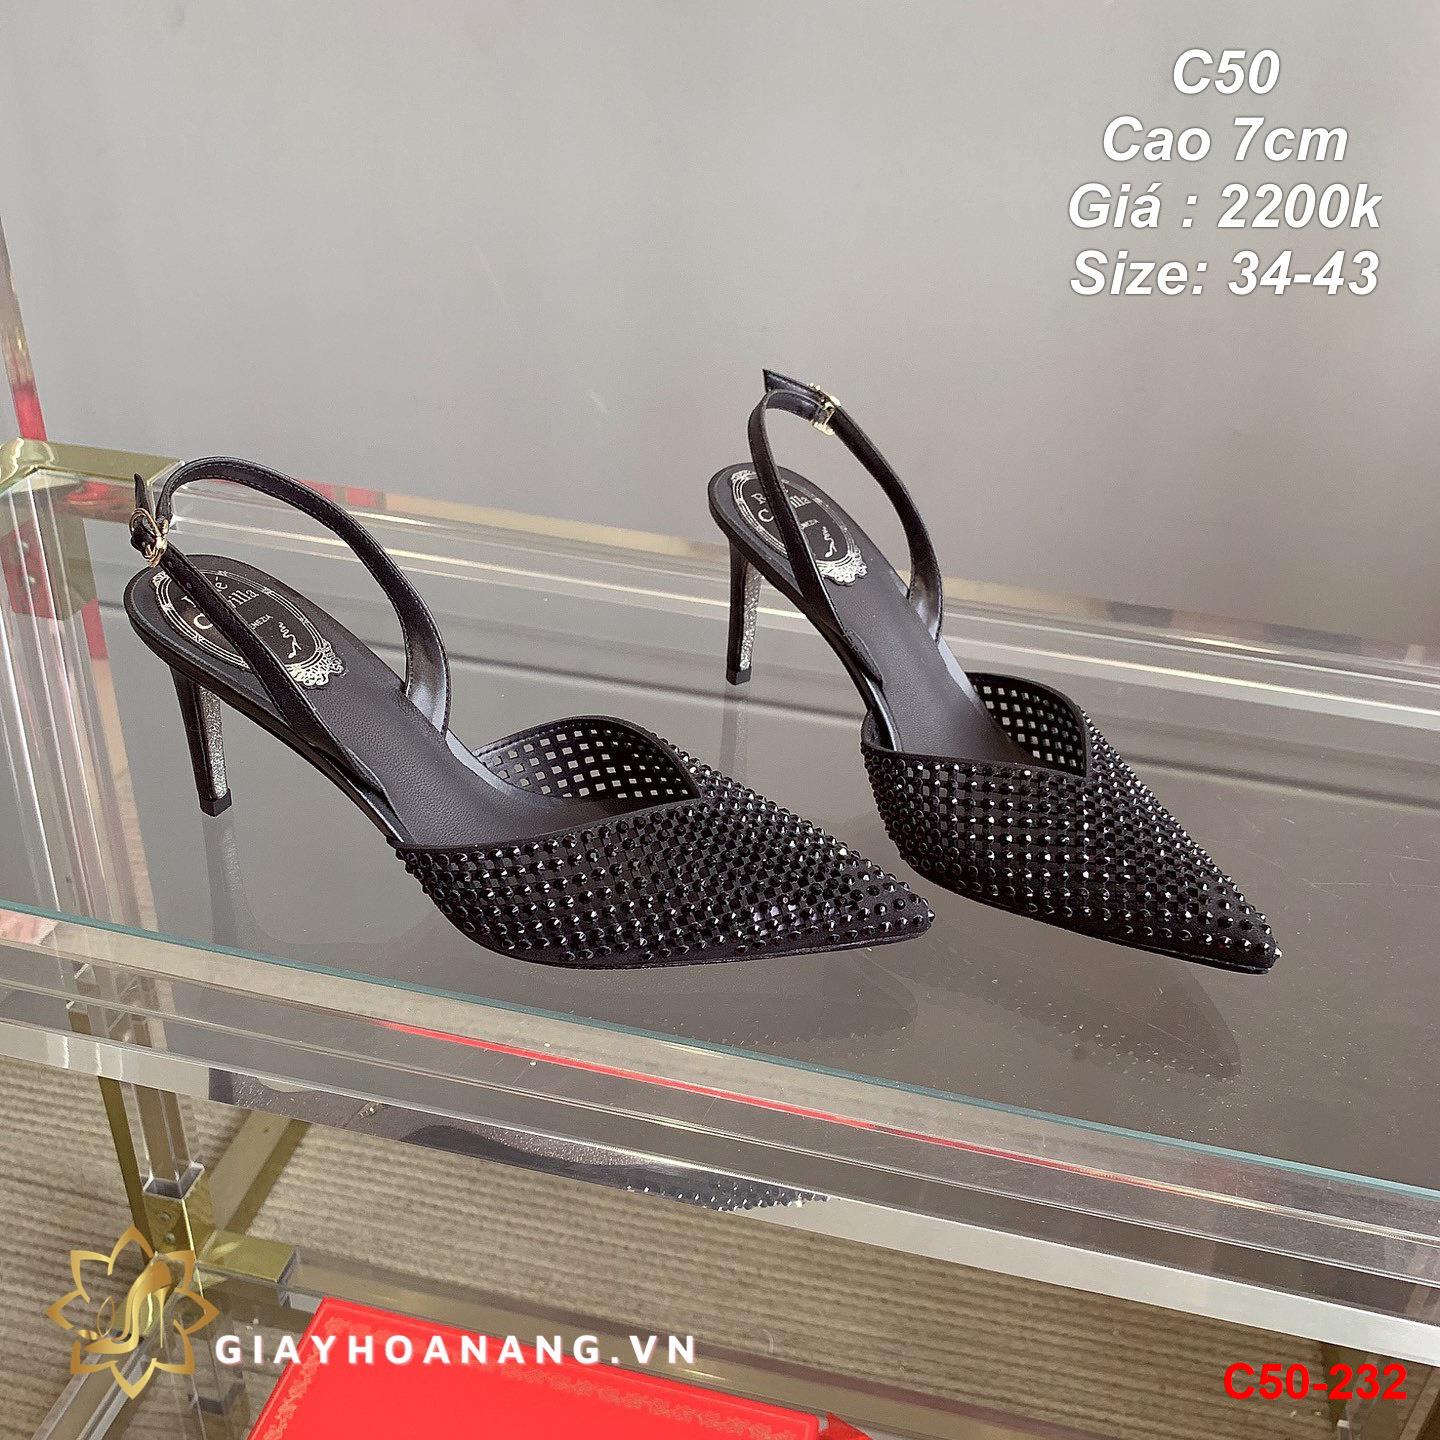 C50-232 Rene Caovilla sandal cao 7cm siêu cấp